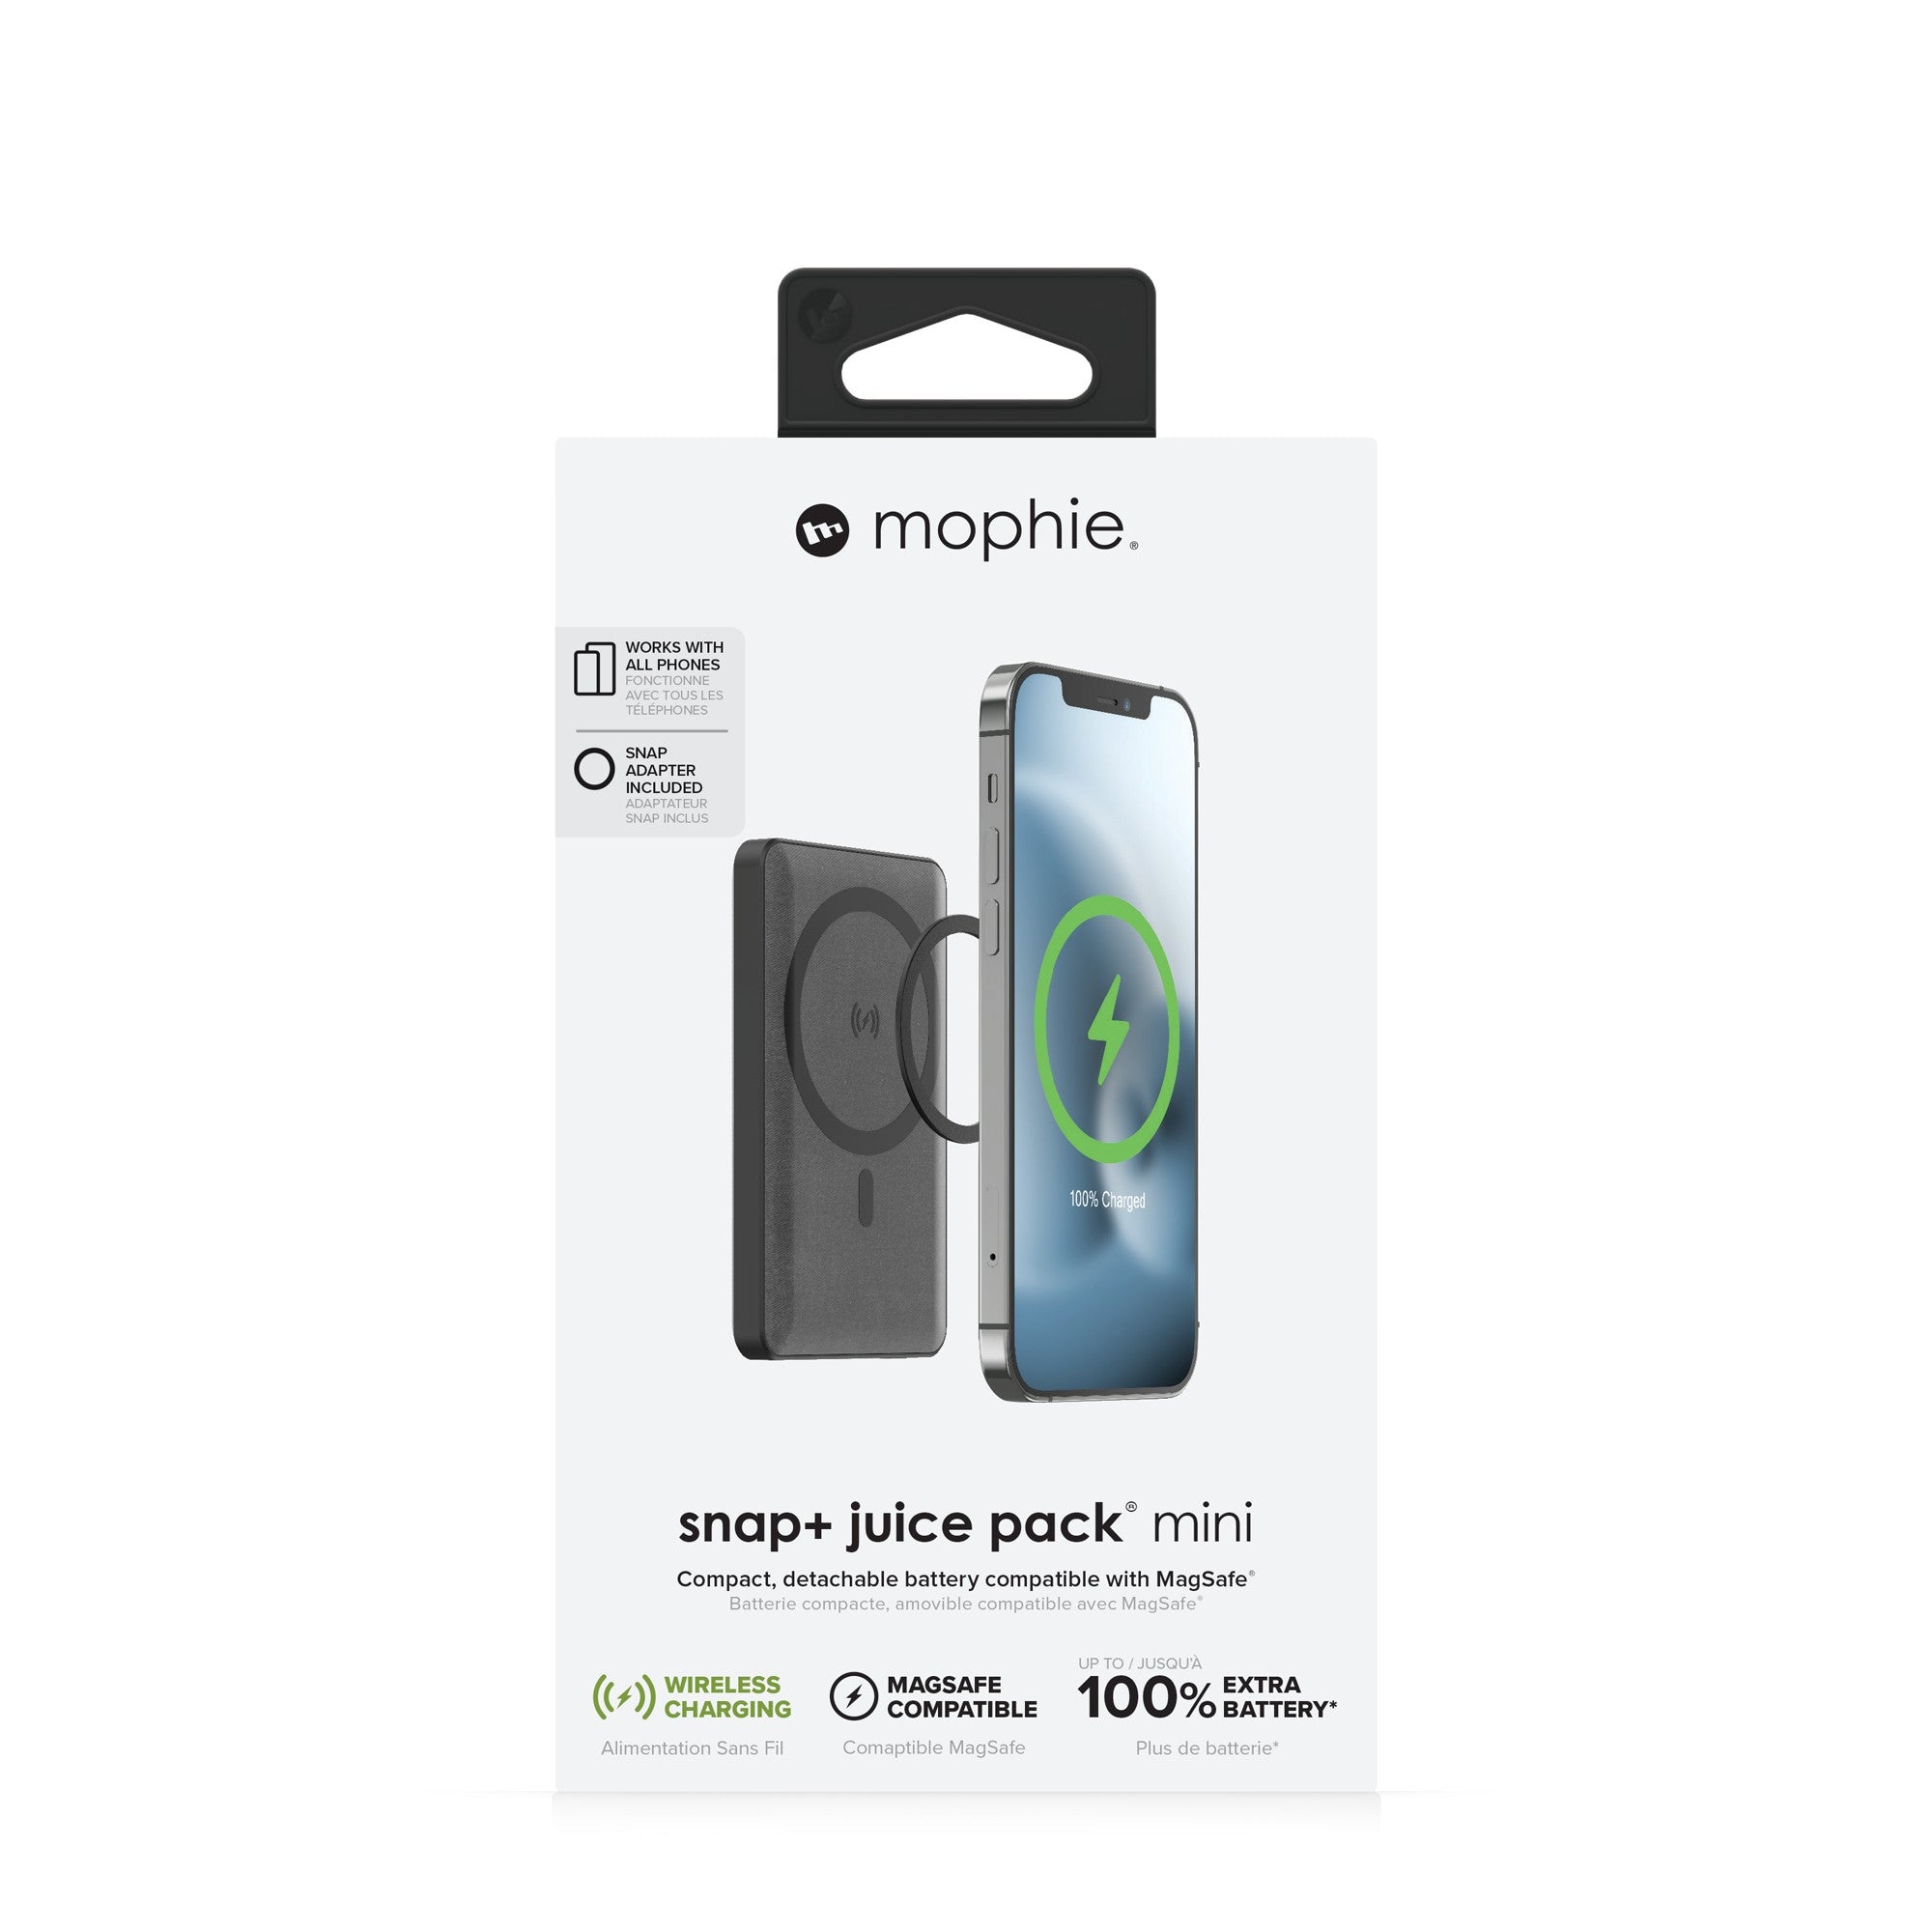 Powerbank inalámbrico mophie snap+ juice pack mini con MagSafe de 5,000mAh